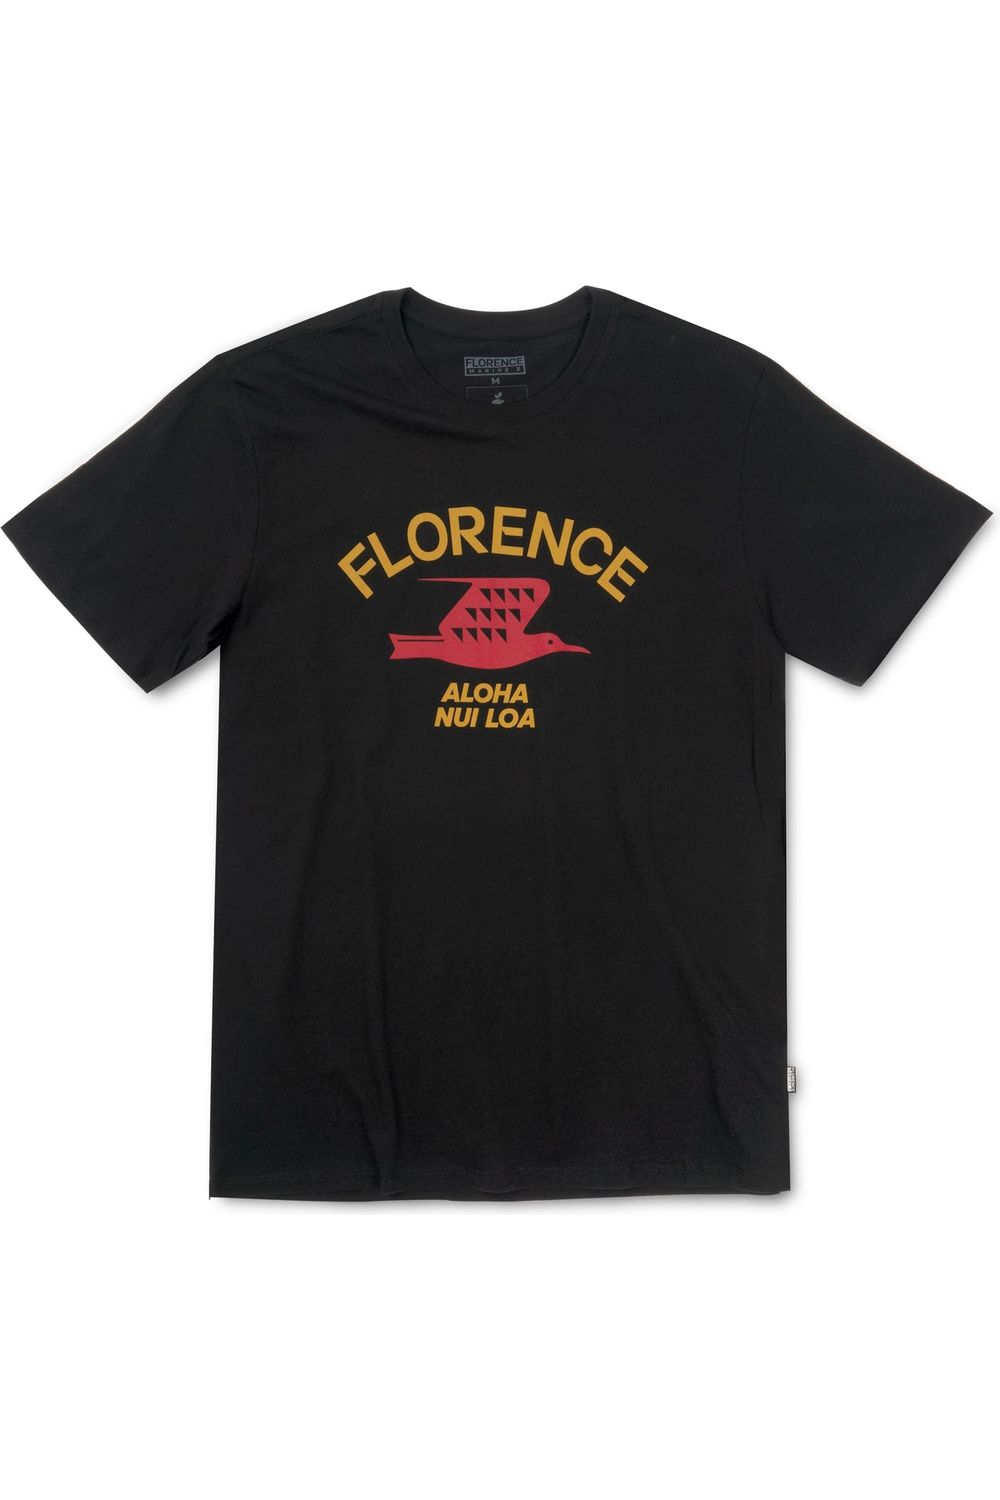 Florence Marine X IWA T-Shirt Black